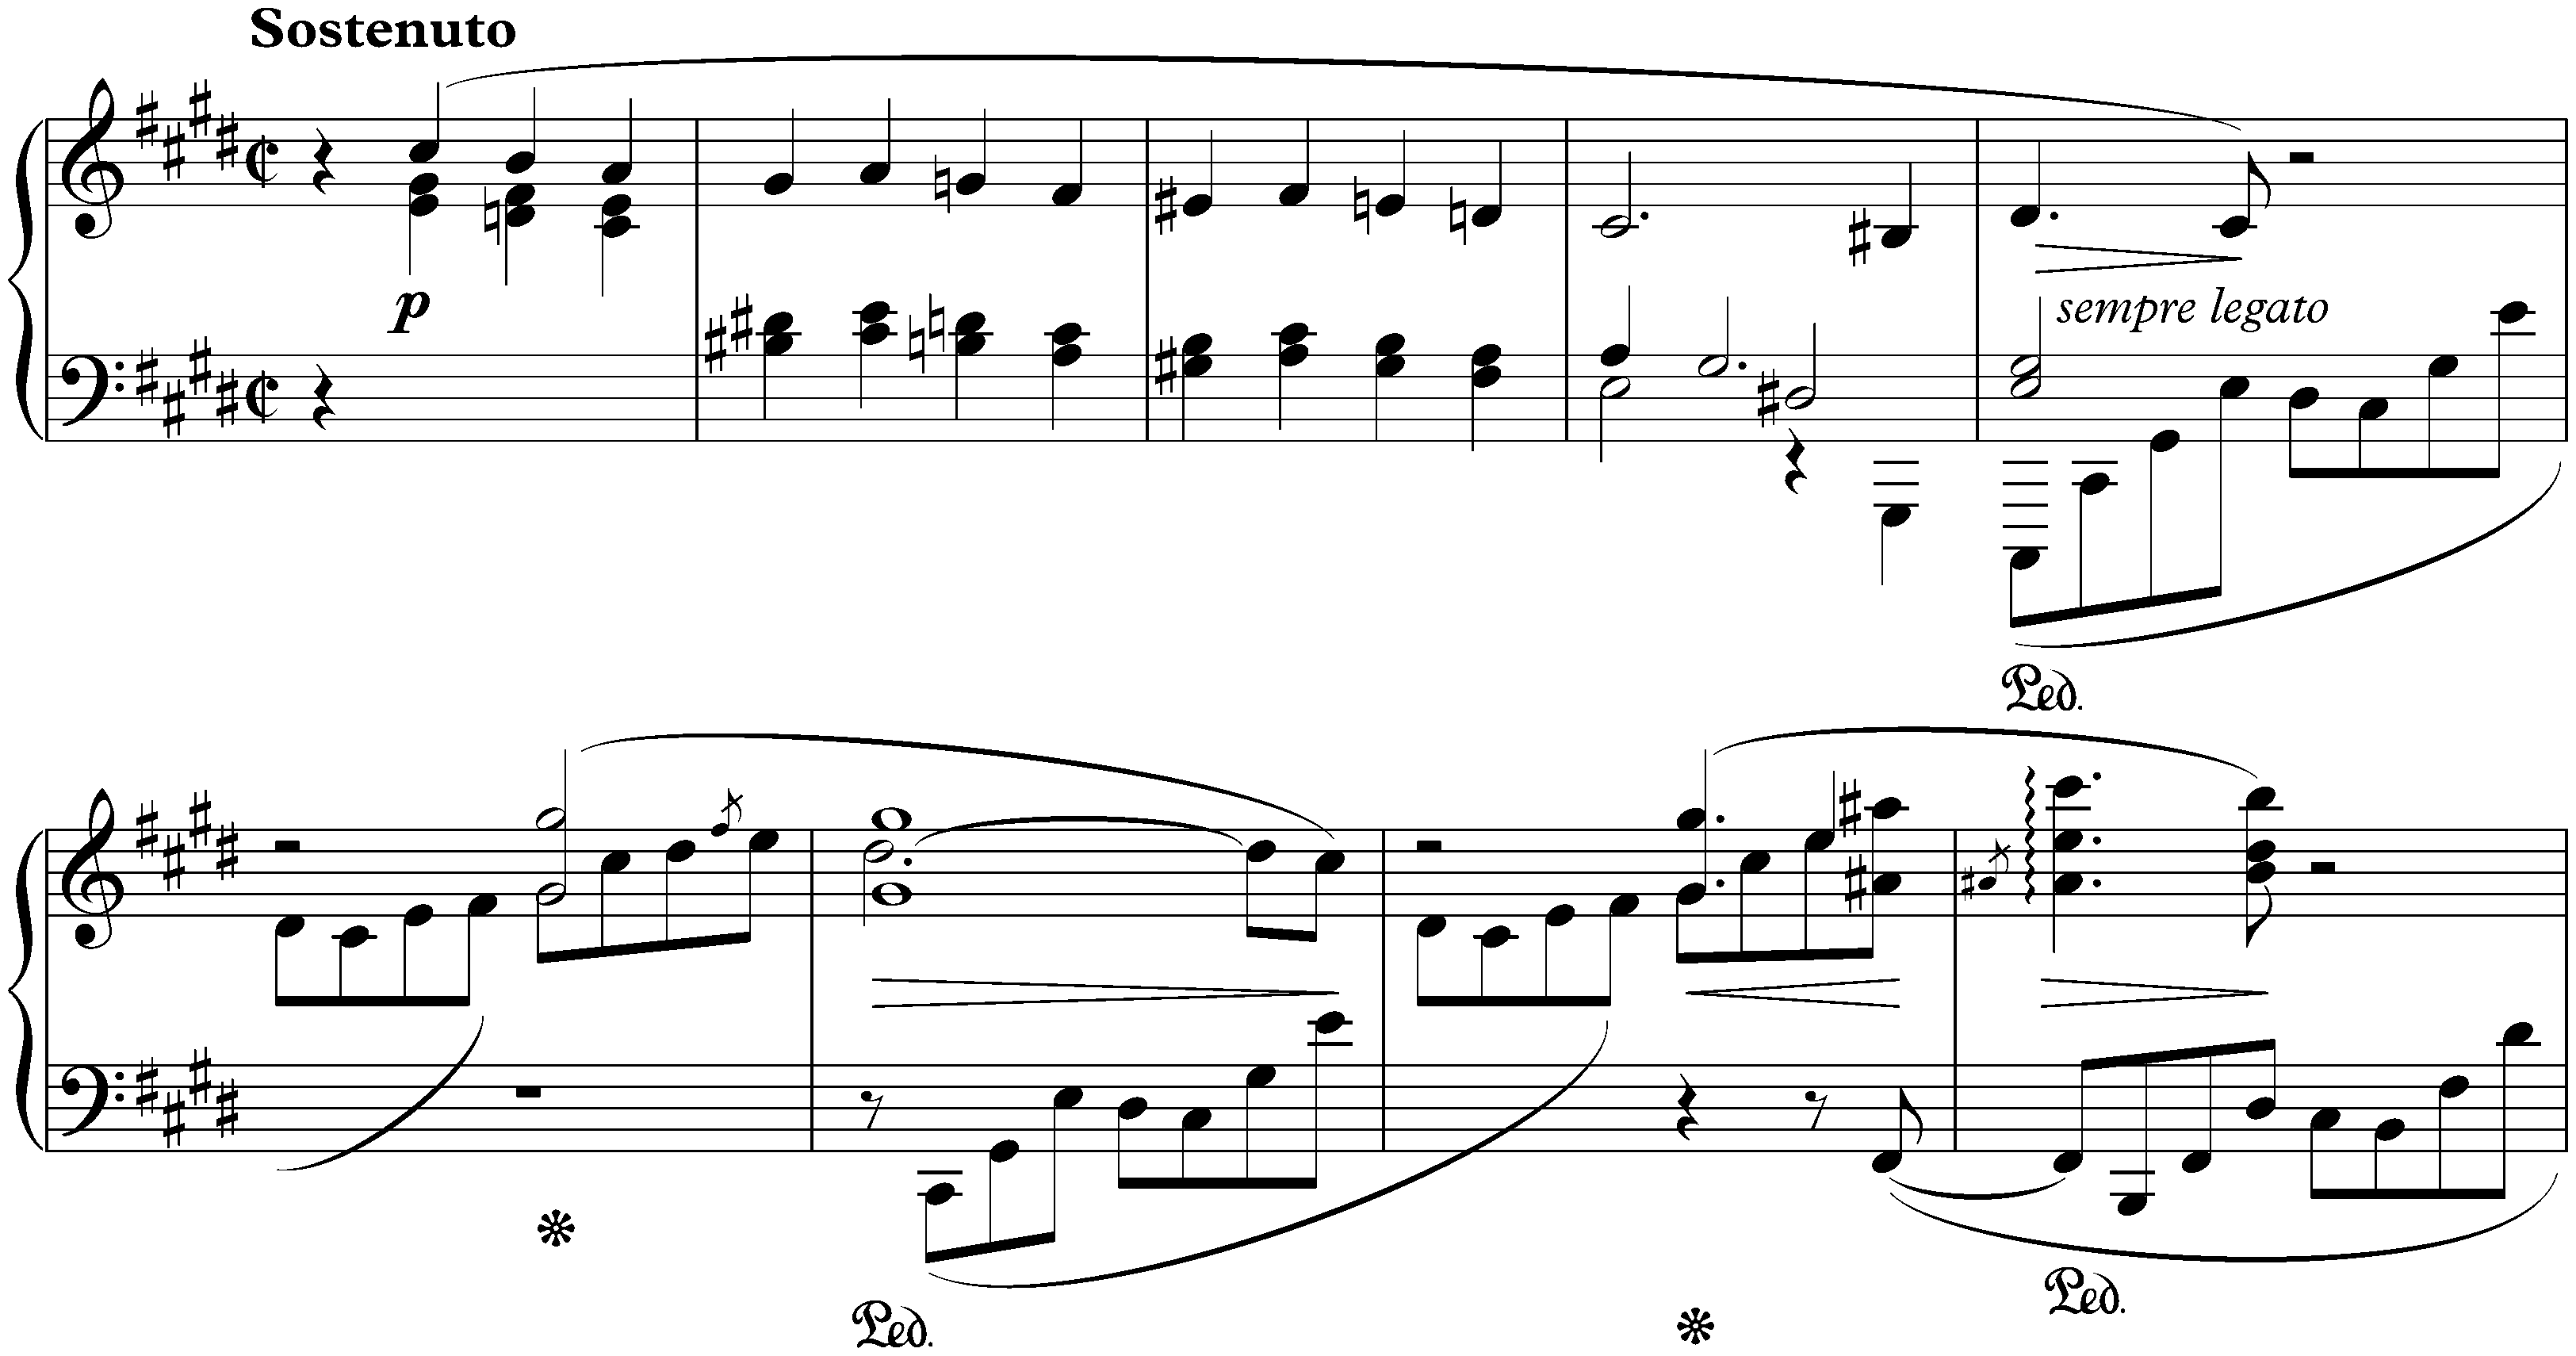 Prélude in C-sharp minor, op. 45